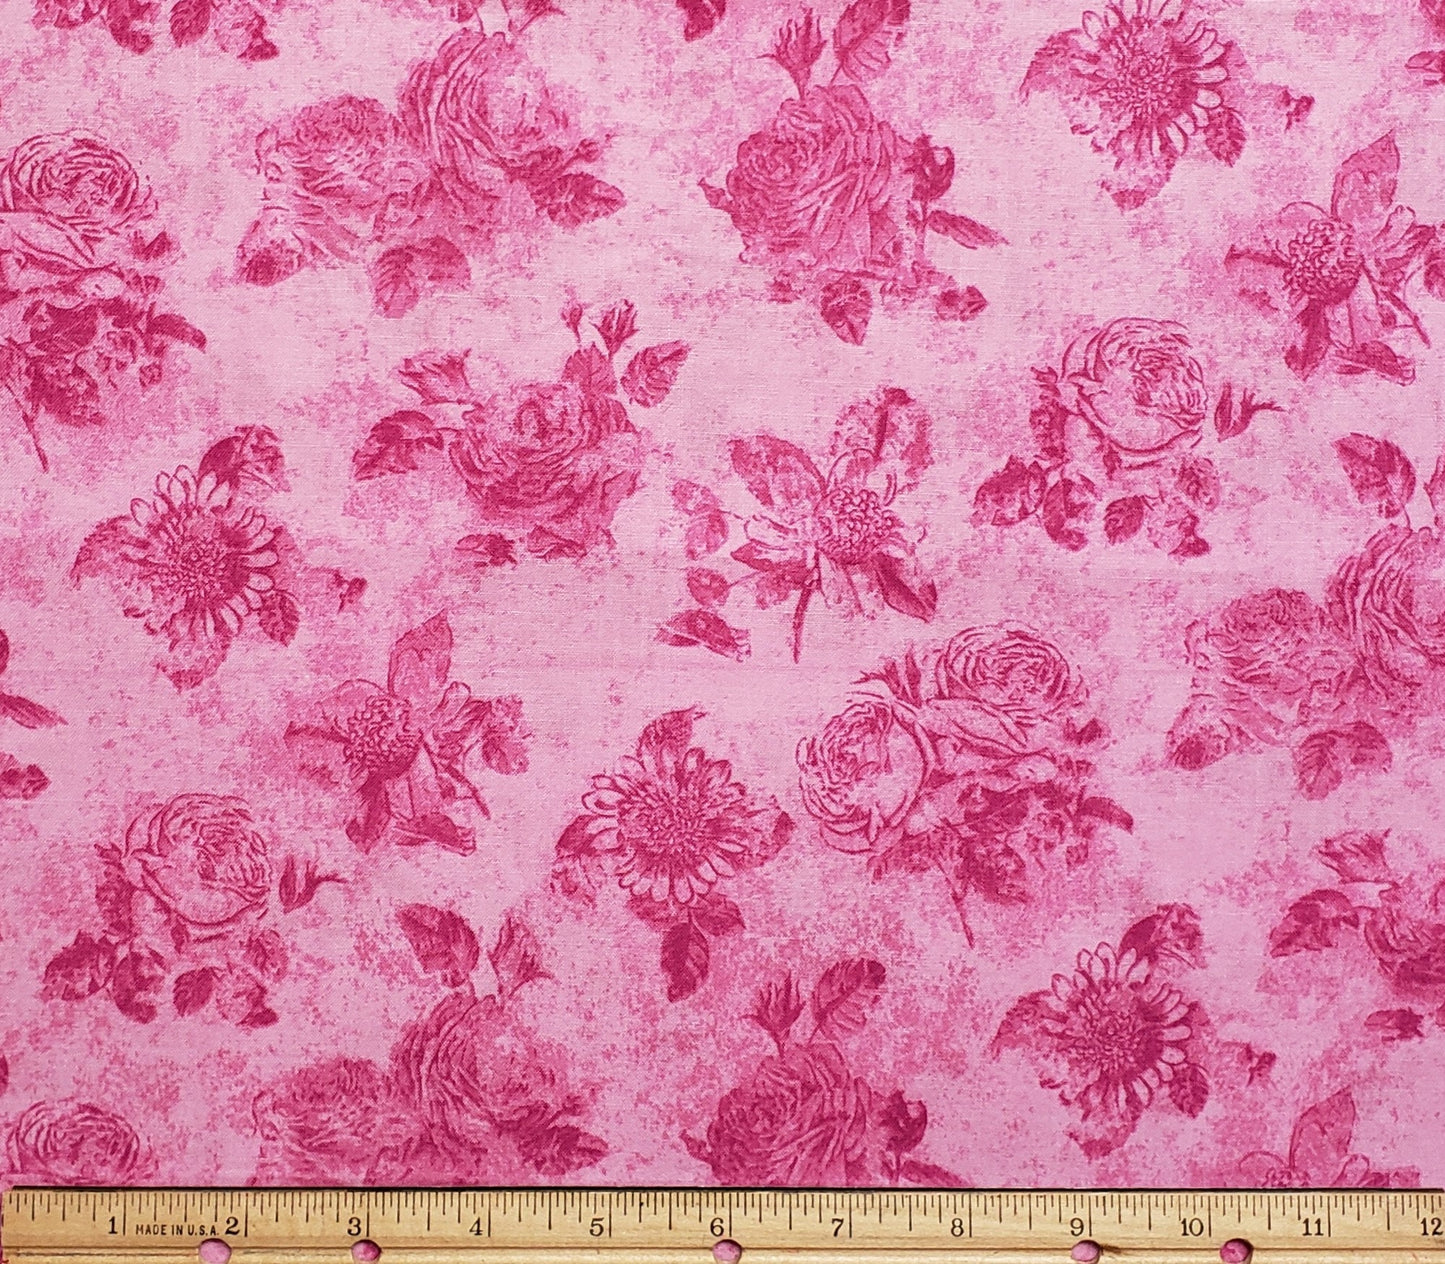 EOB - MBT, TM - Light Pink Fabric / Dark Pink Flower Print